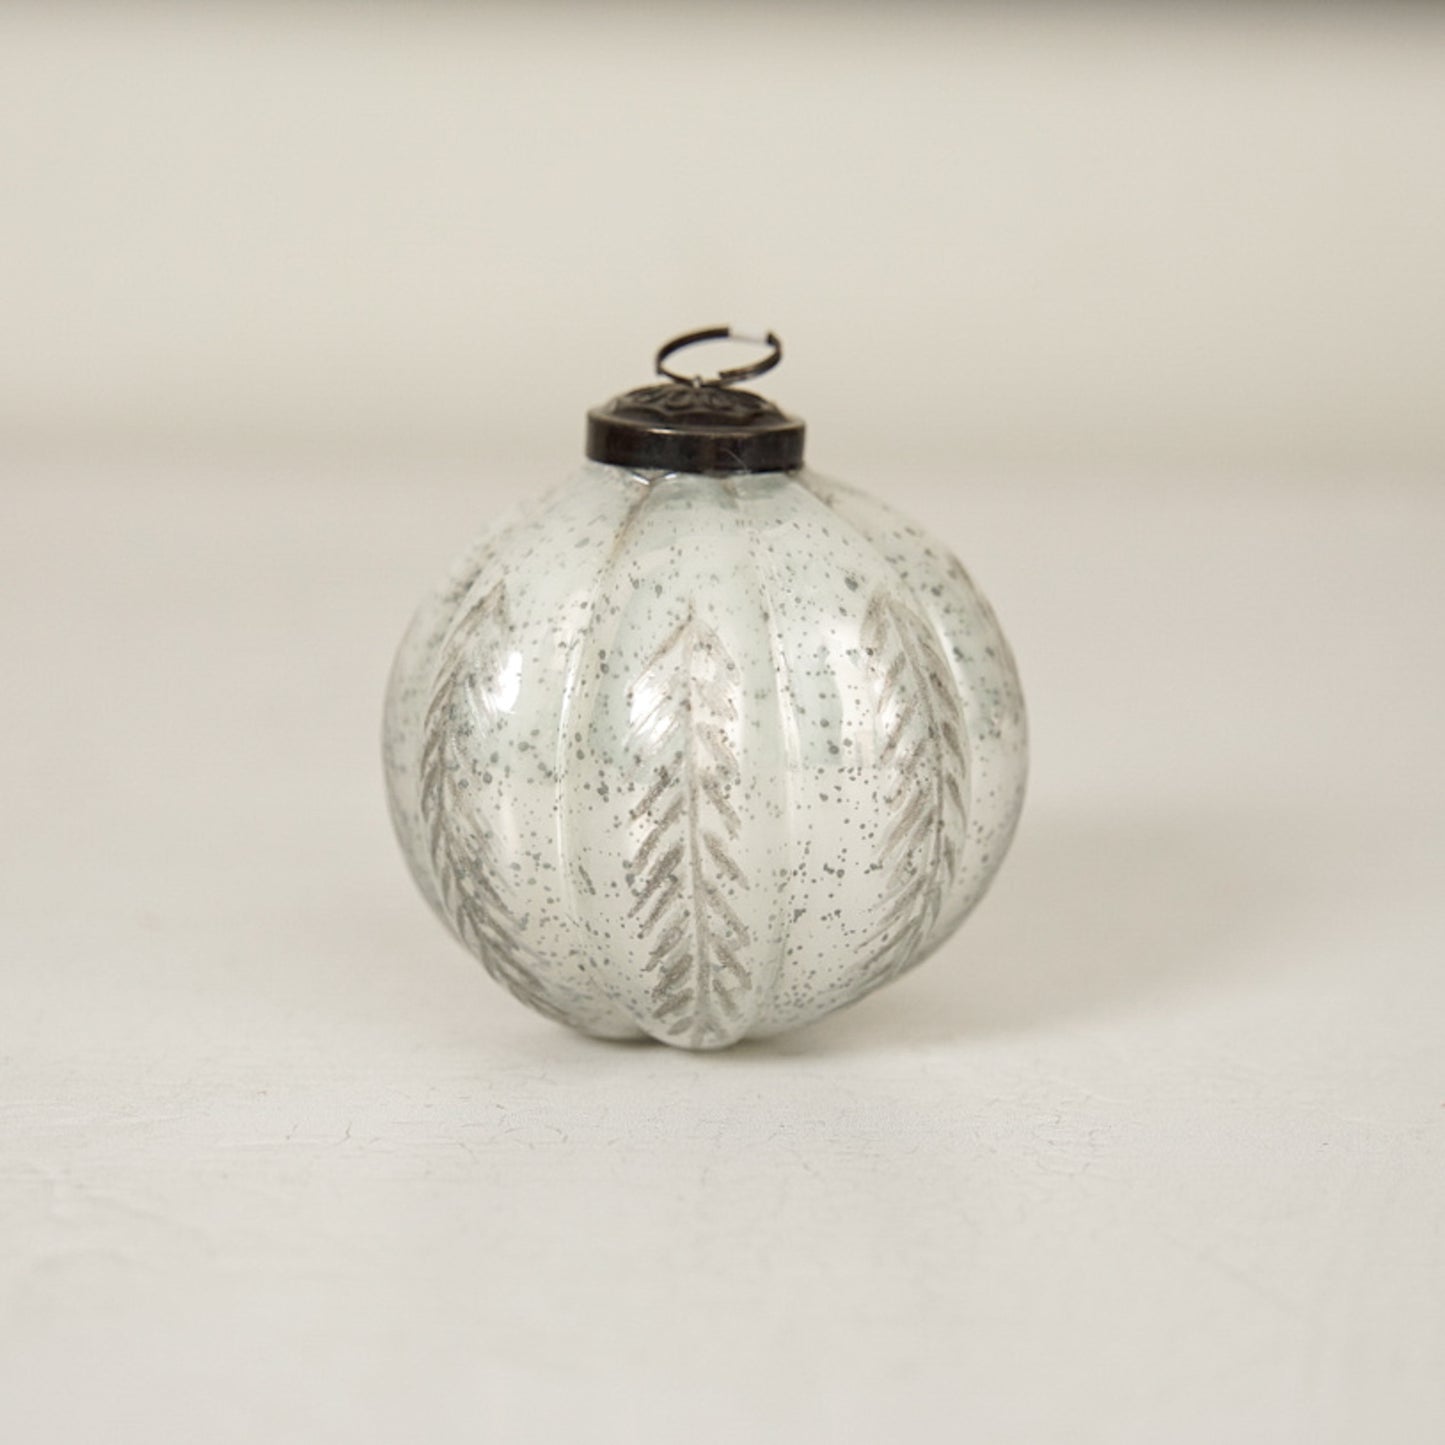 Fir Branch Etched Mercury Glass Ornament